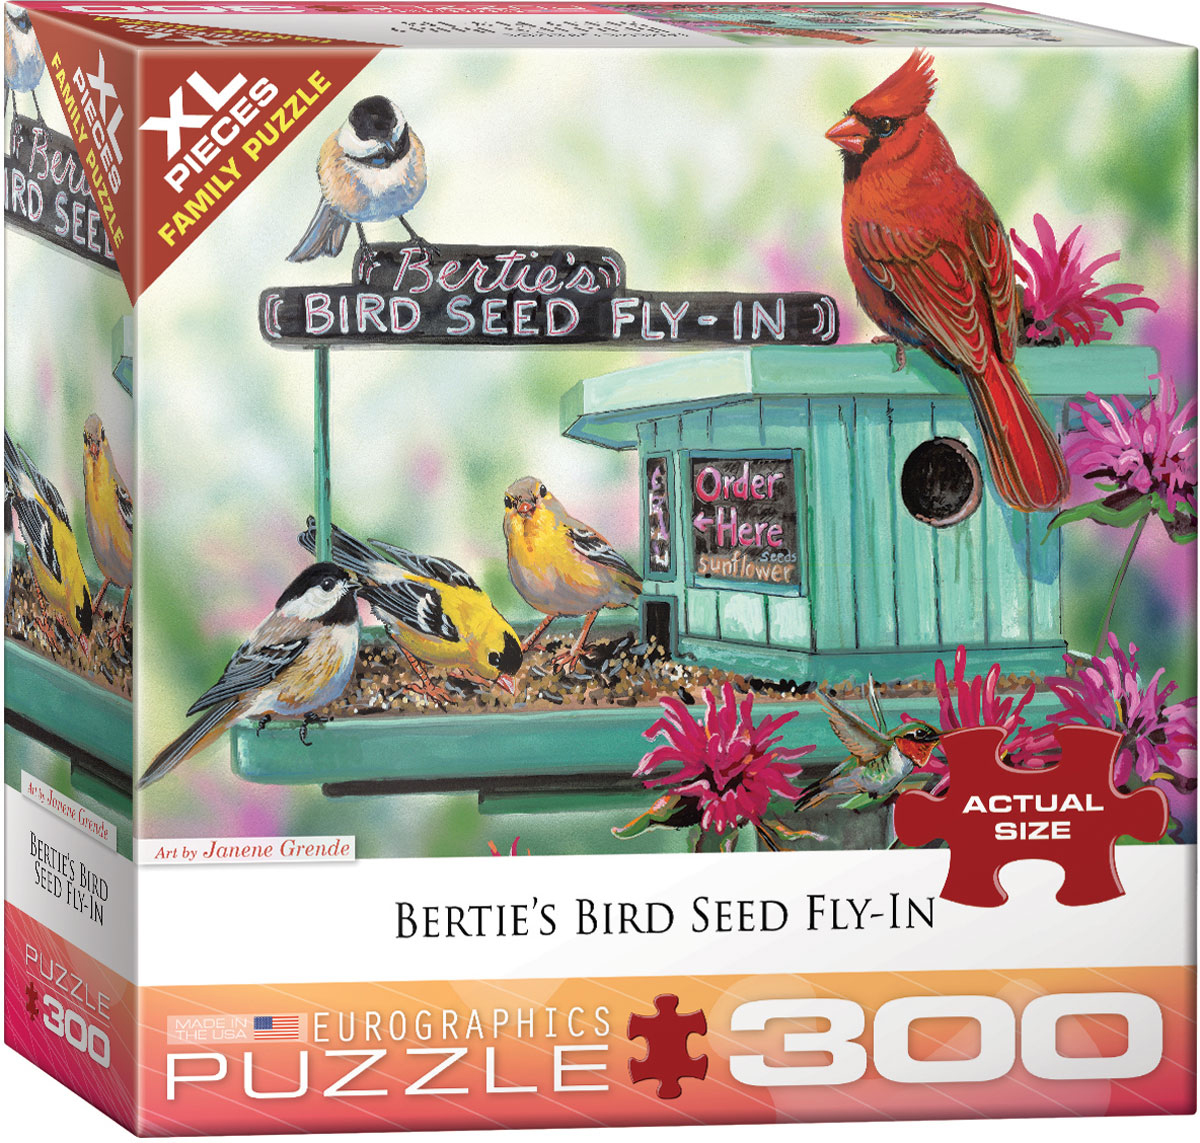 Bertie's Bird Seed Fly-In